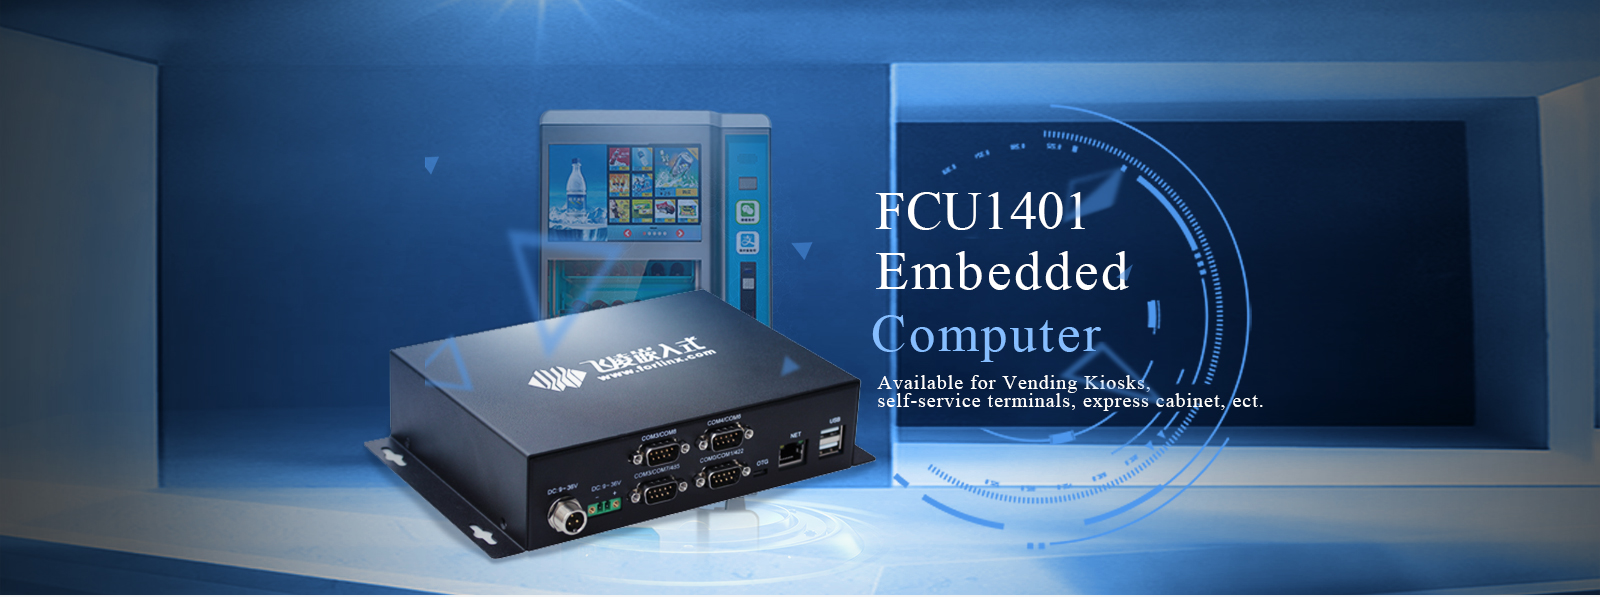 FCU1401 Embedded Computer